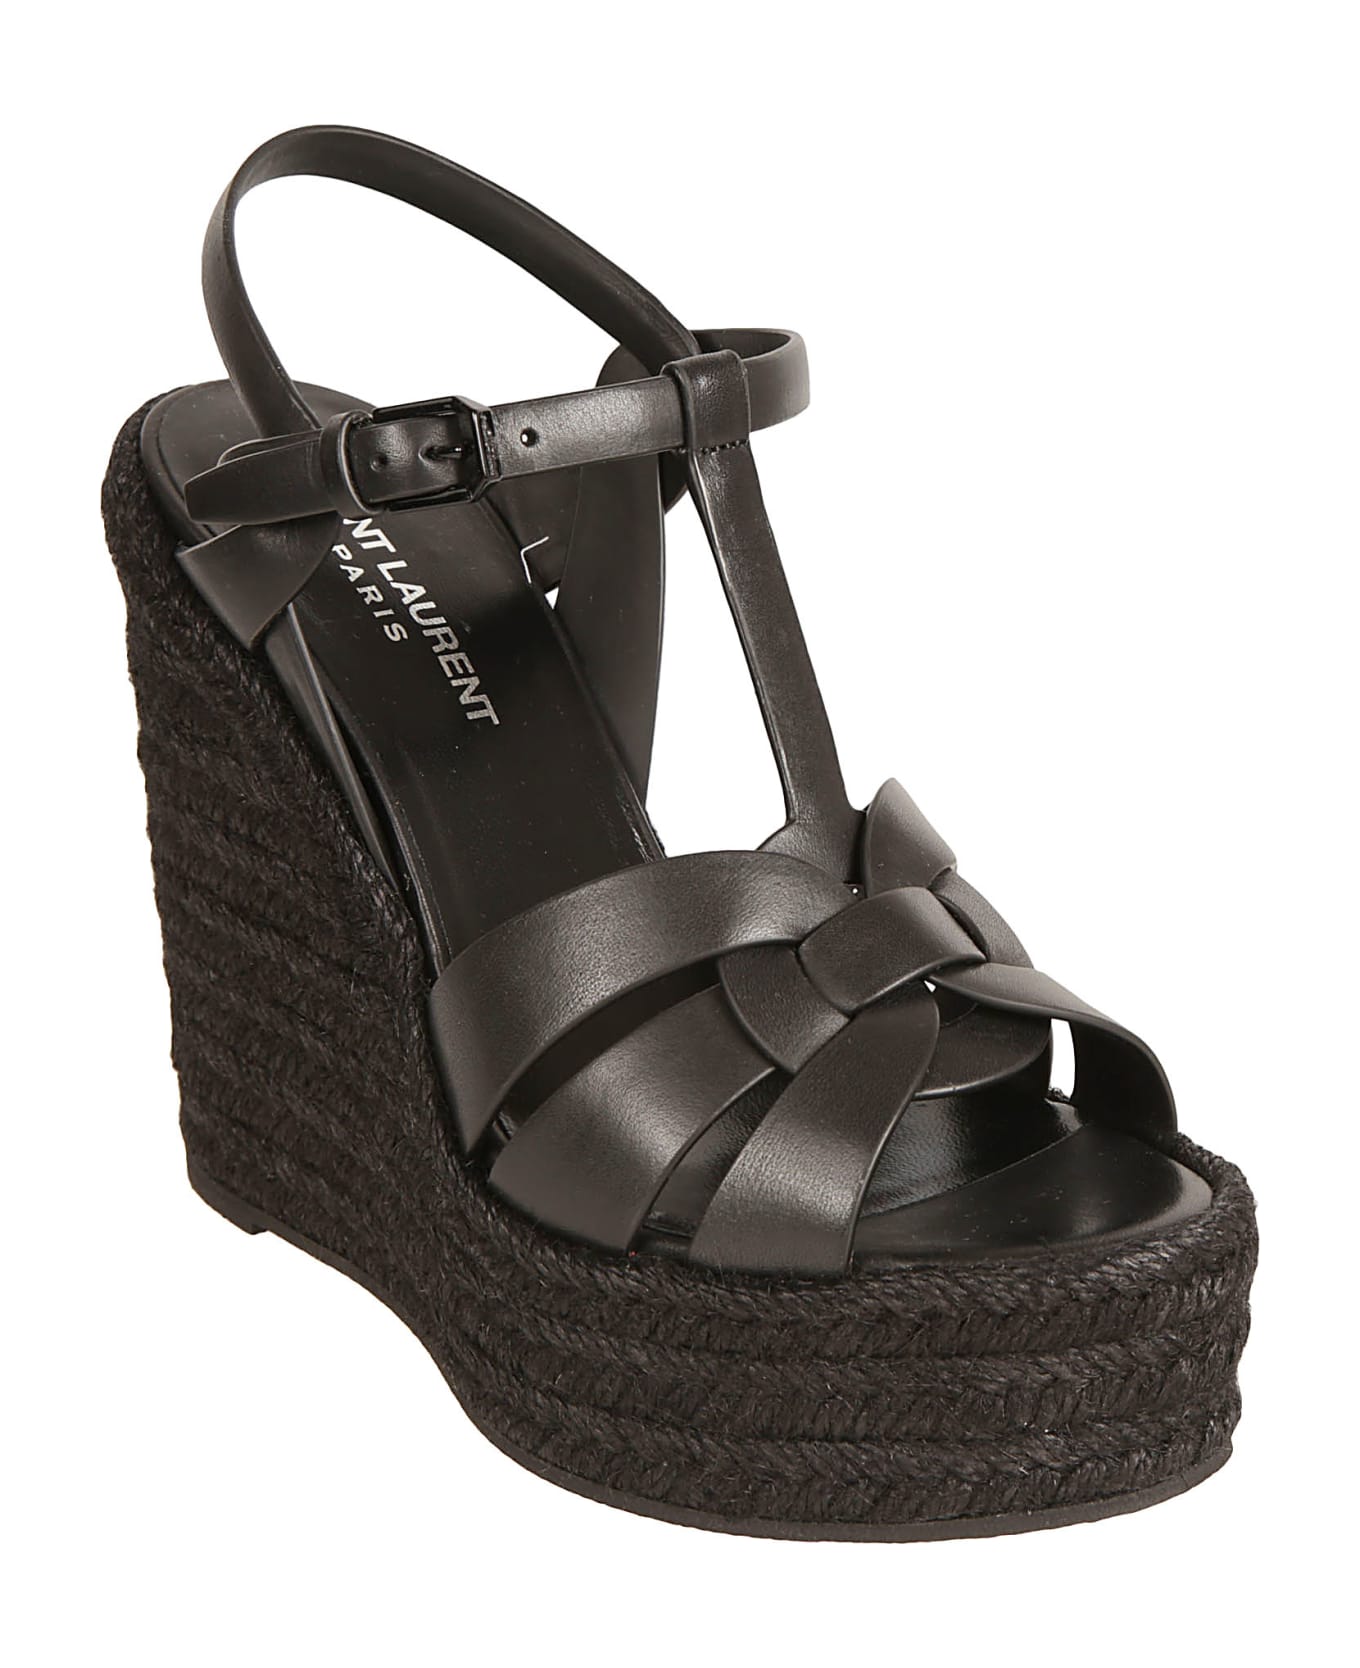 Saint Laurent 85 T Espadrillas Sandals - Black